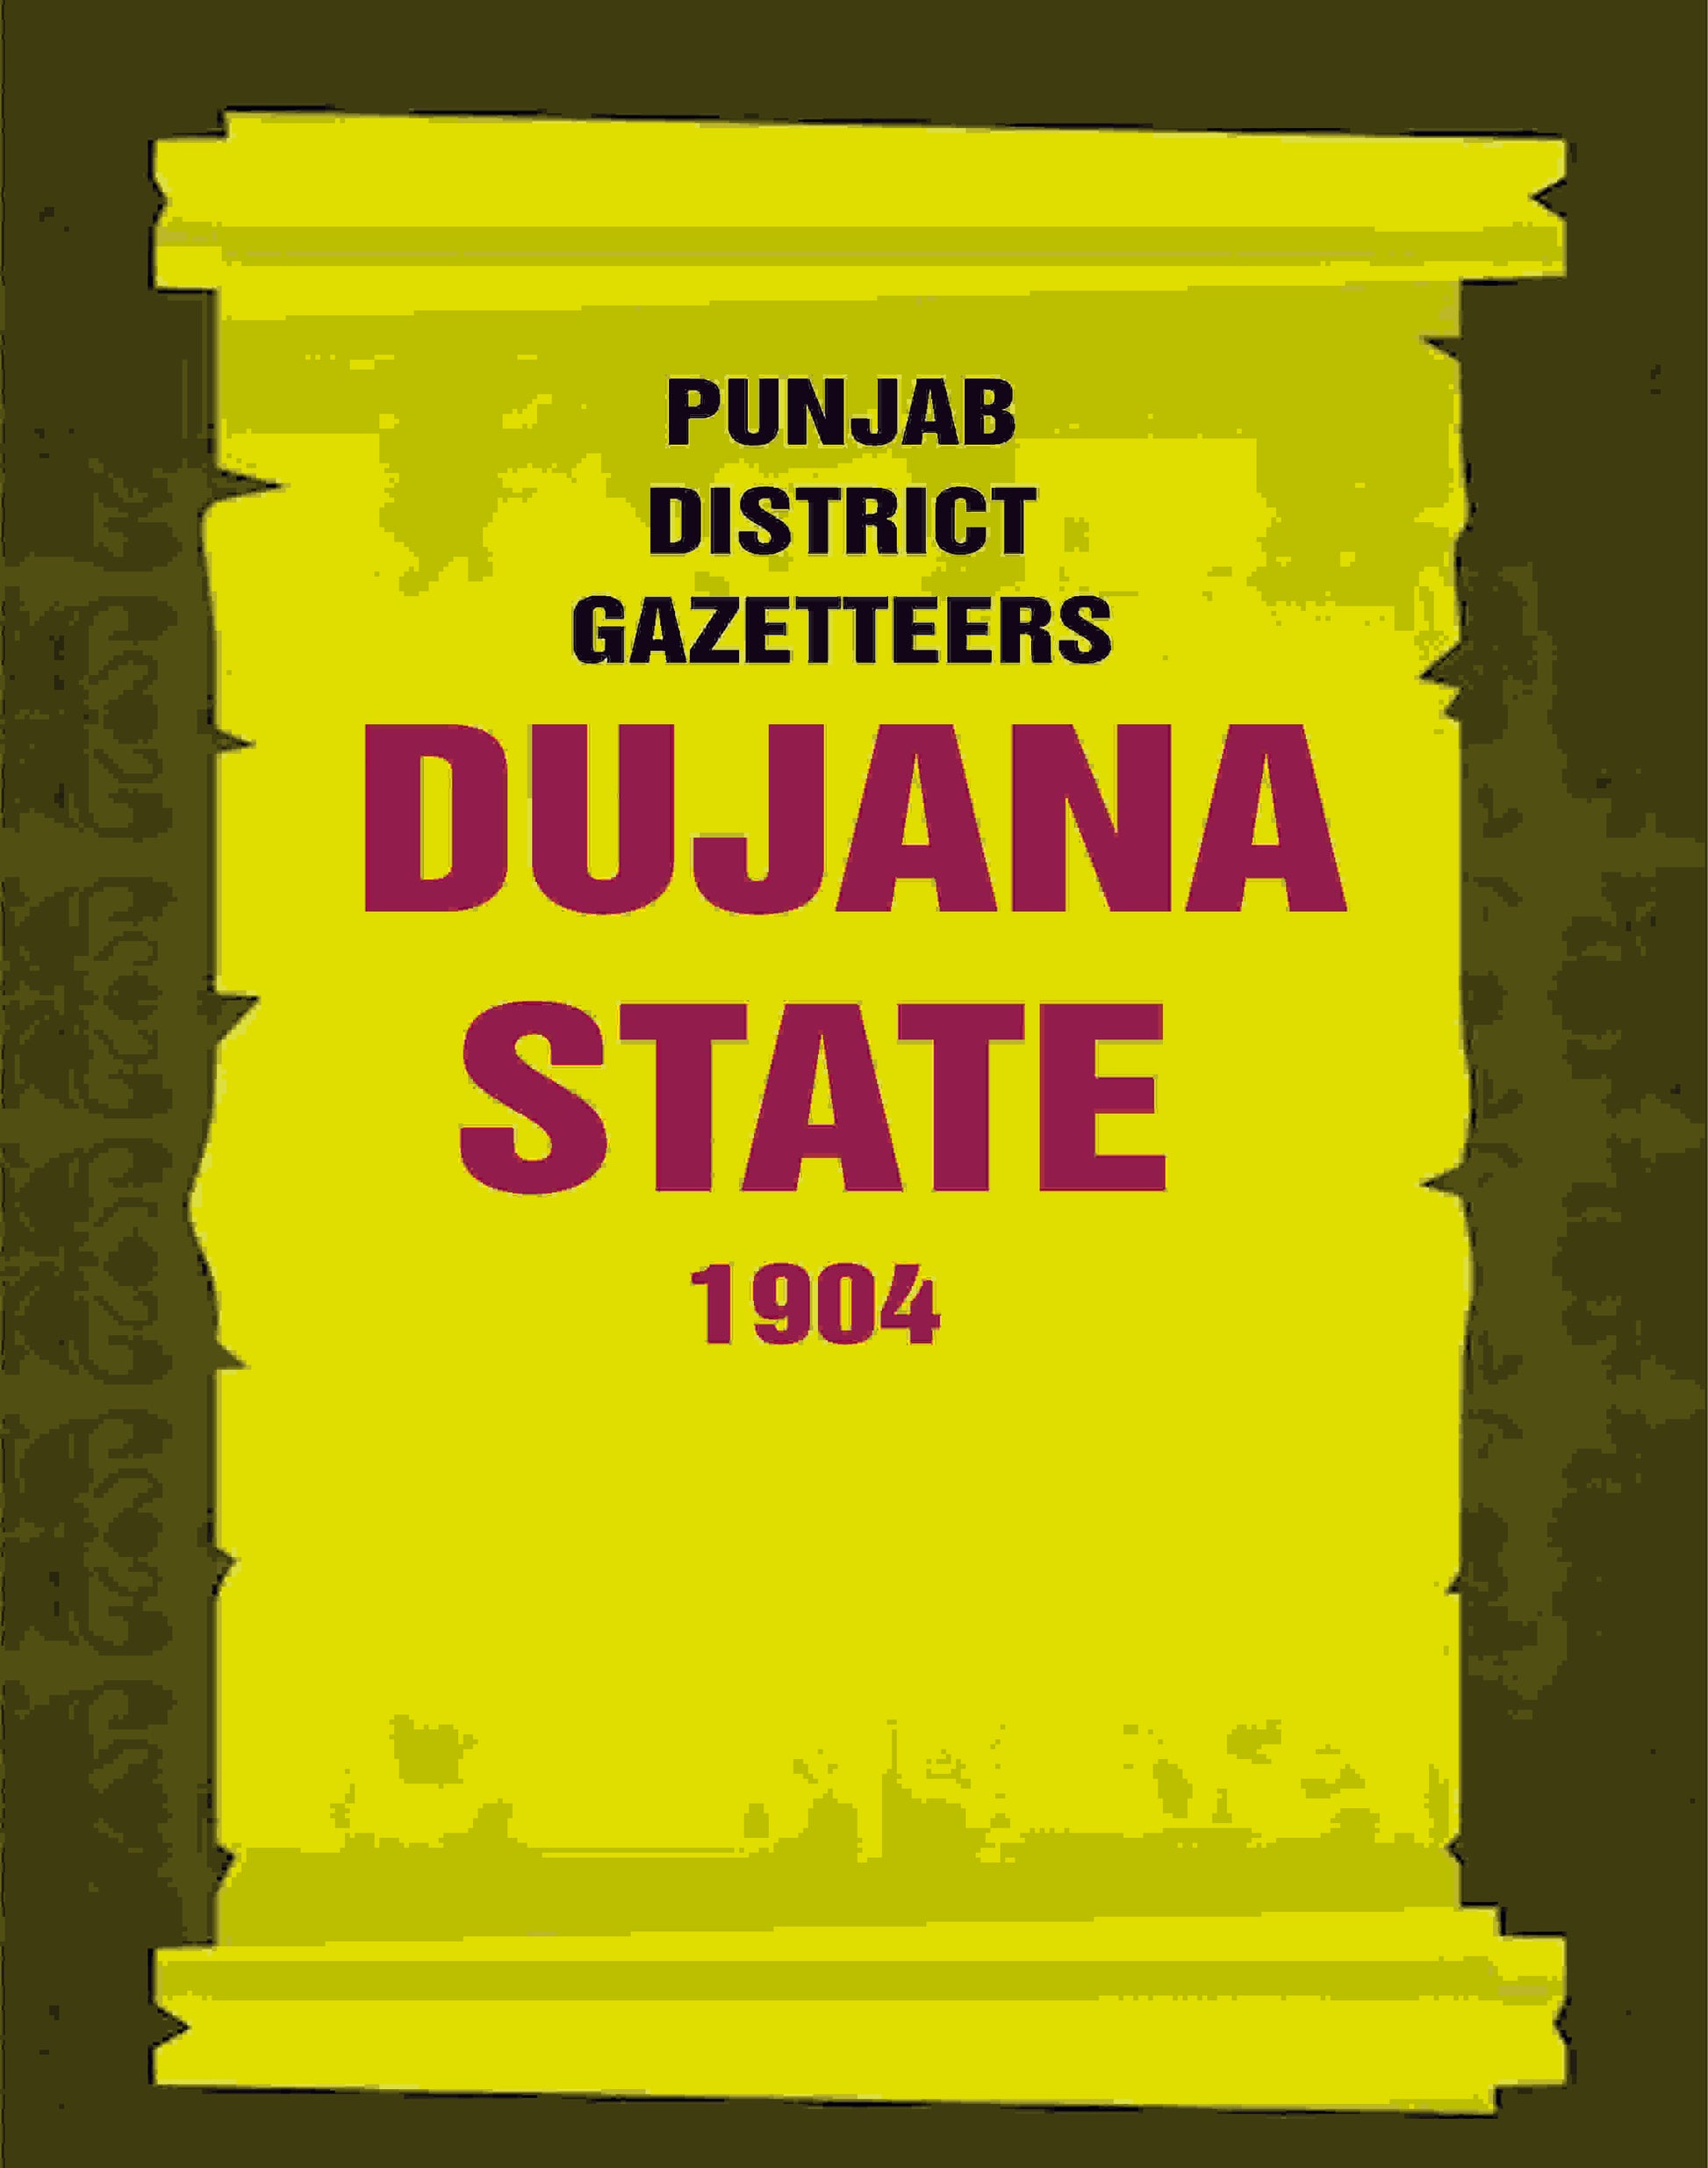 Punjab District Gazetteers: Dujana State 1904